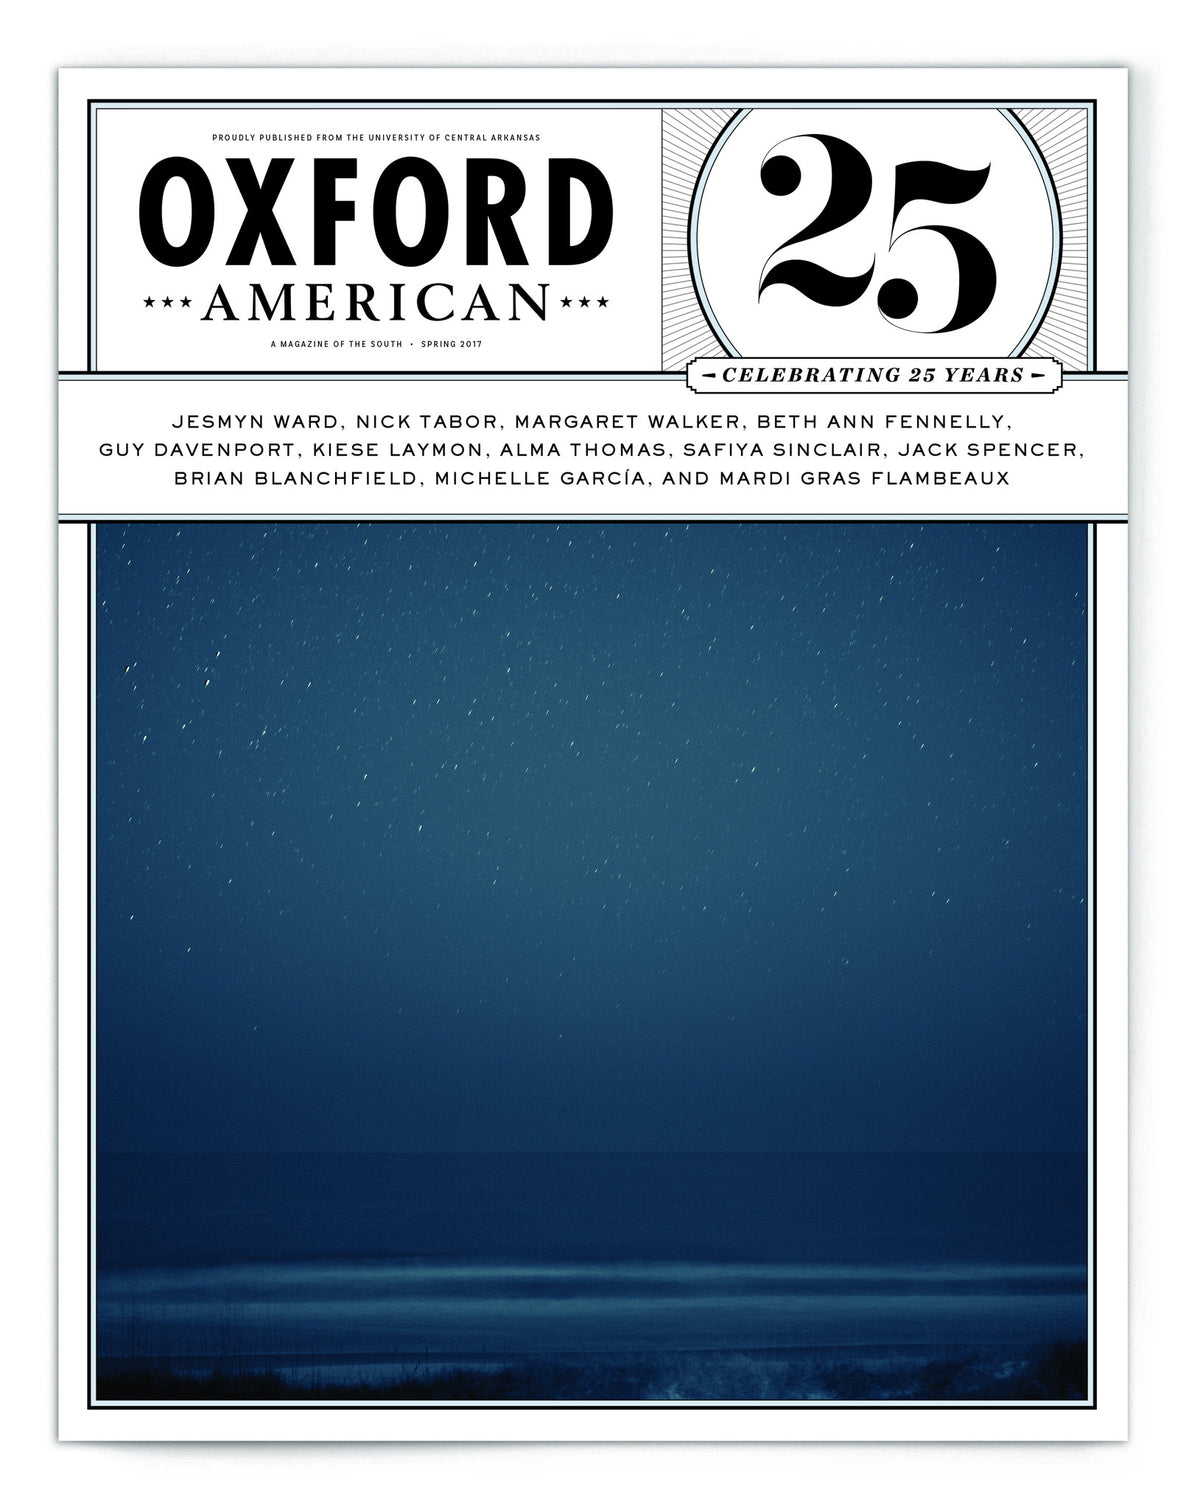 University of Oxford, Oxford - The Oxford Magazine